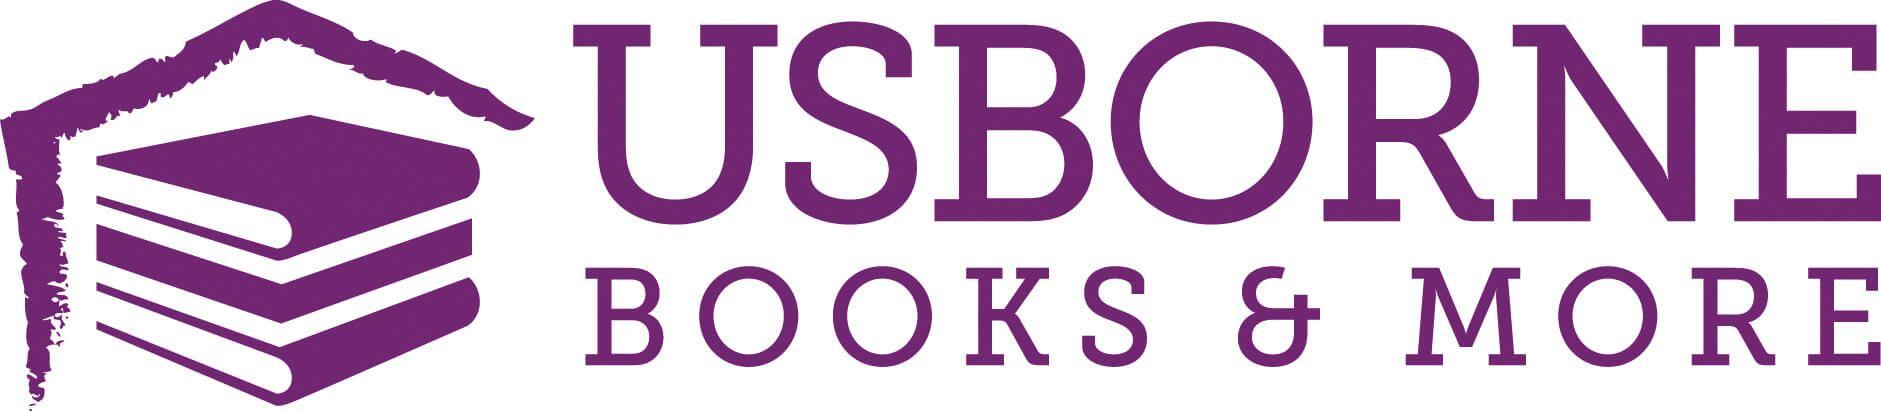 Usborne Books Logo - Usborne Books & More Values Teachers